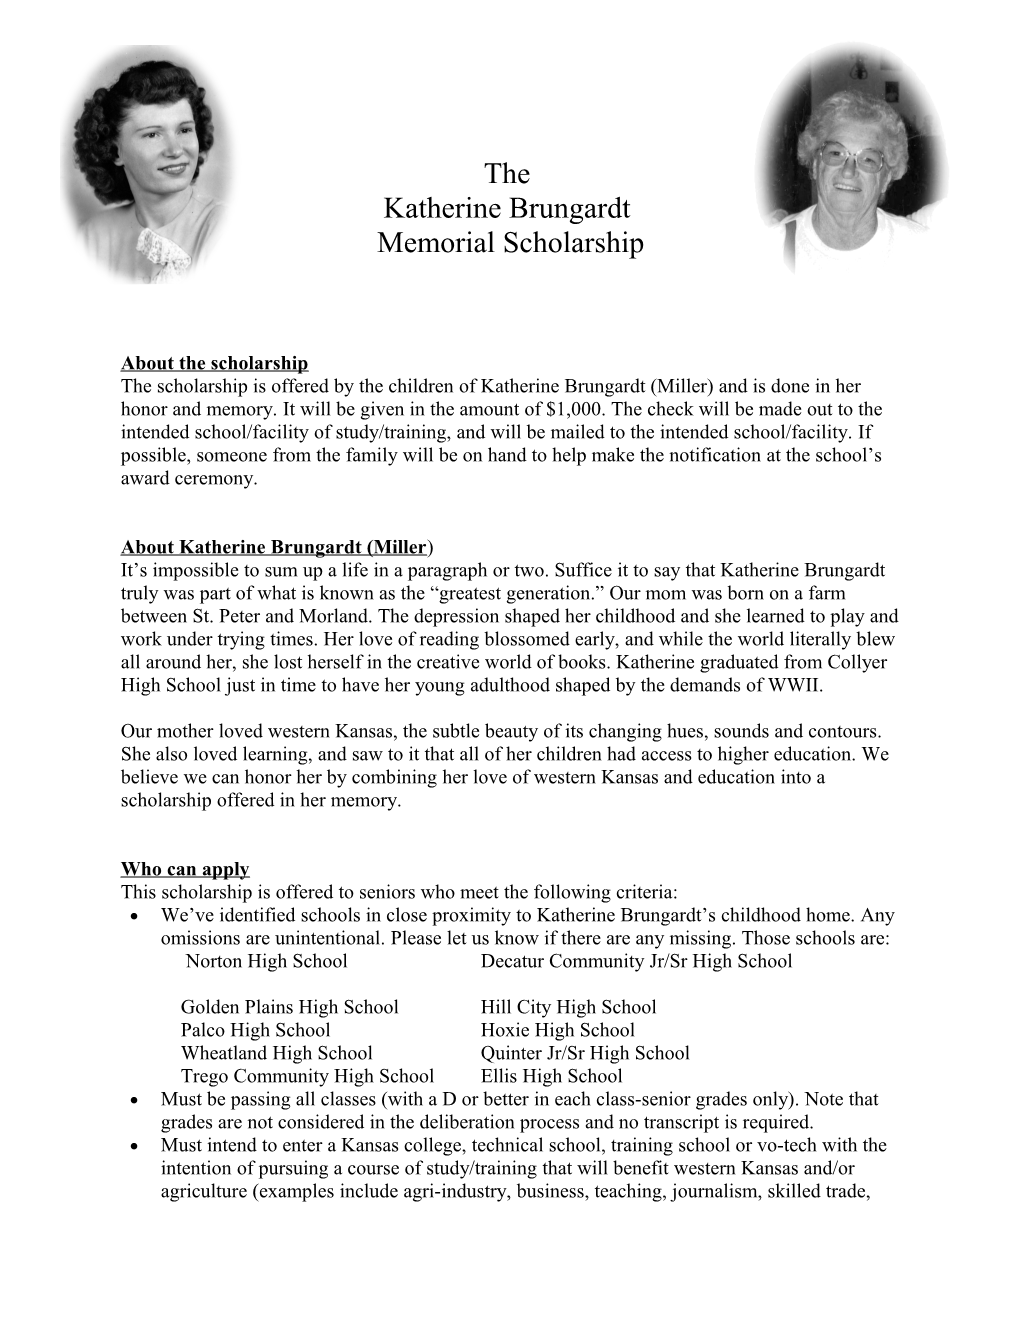 The Katherine Brungardt Memorial Scholarship